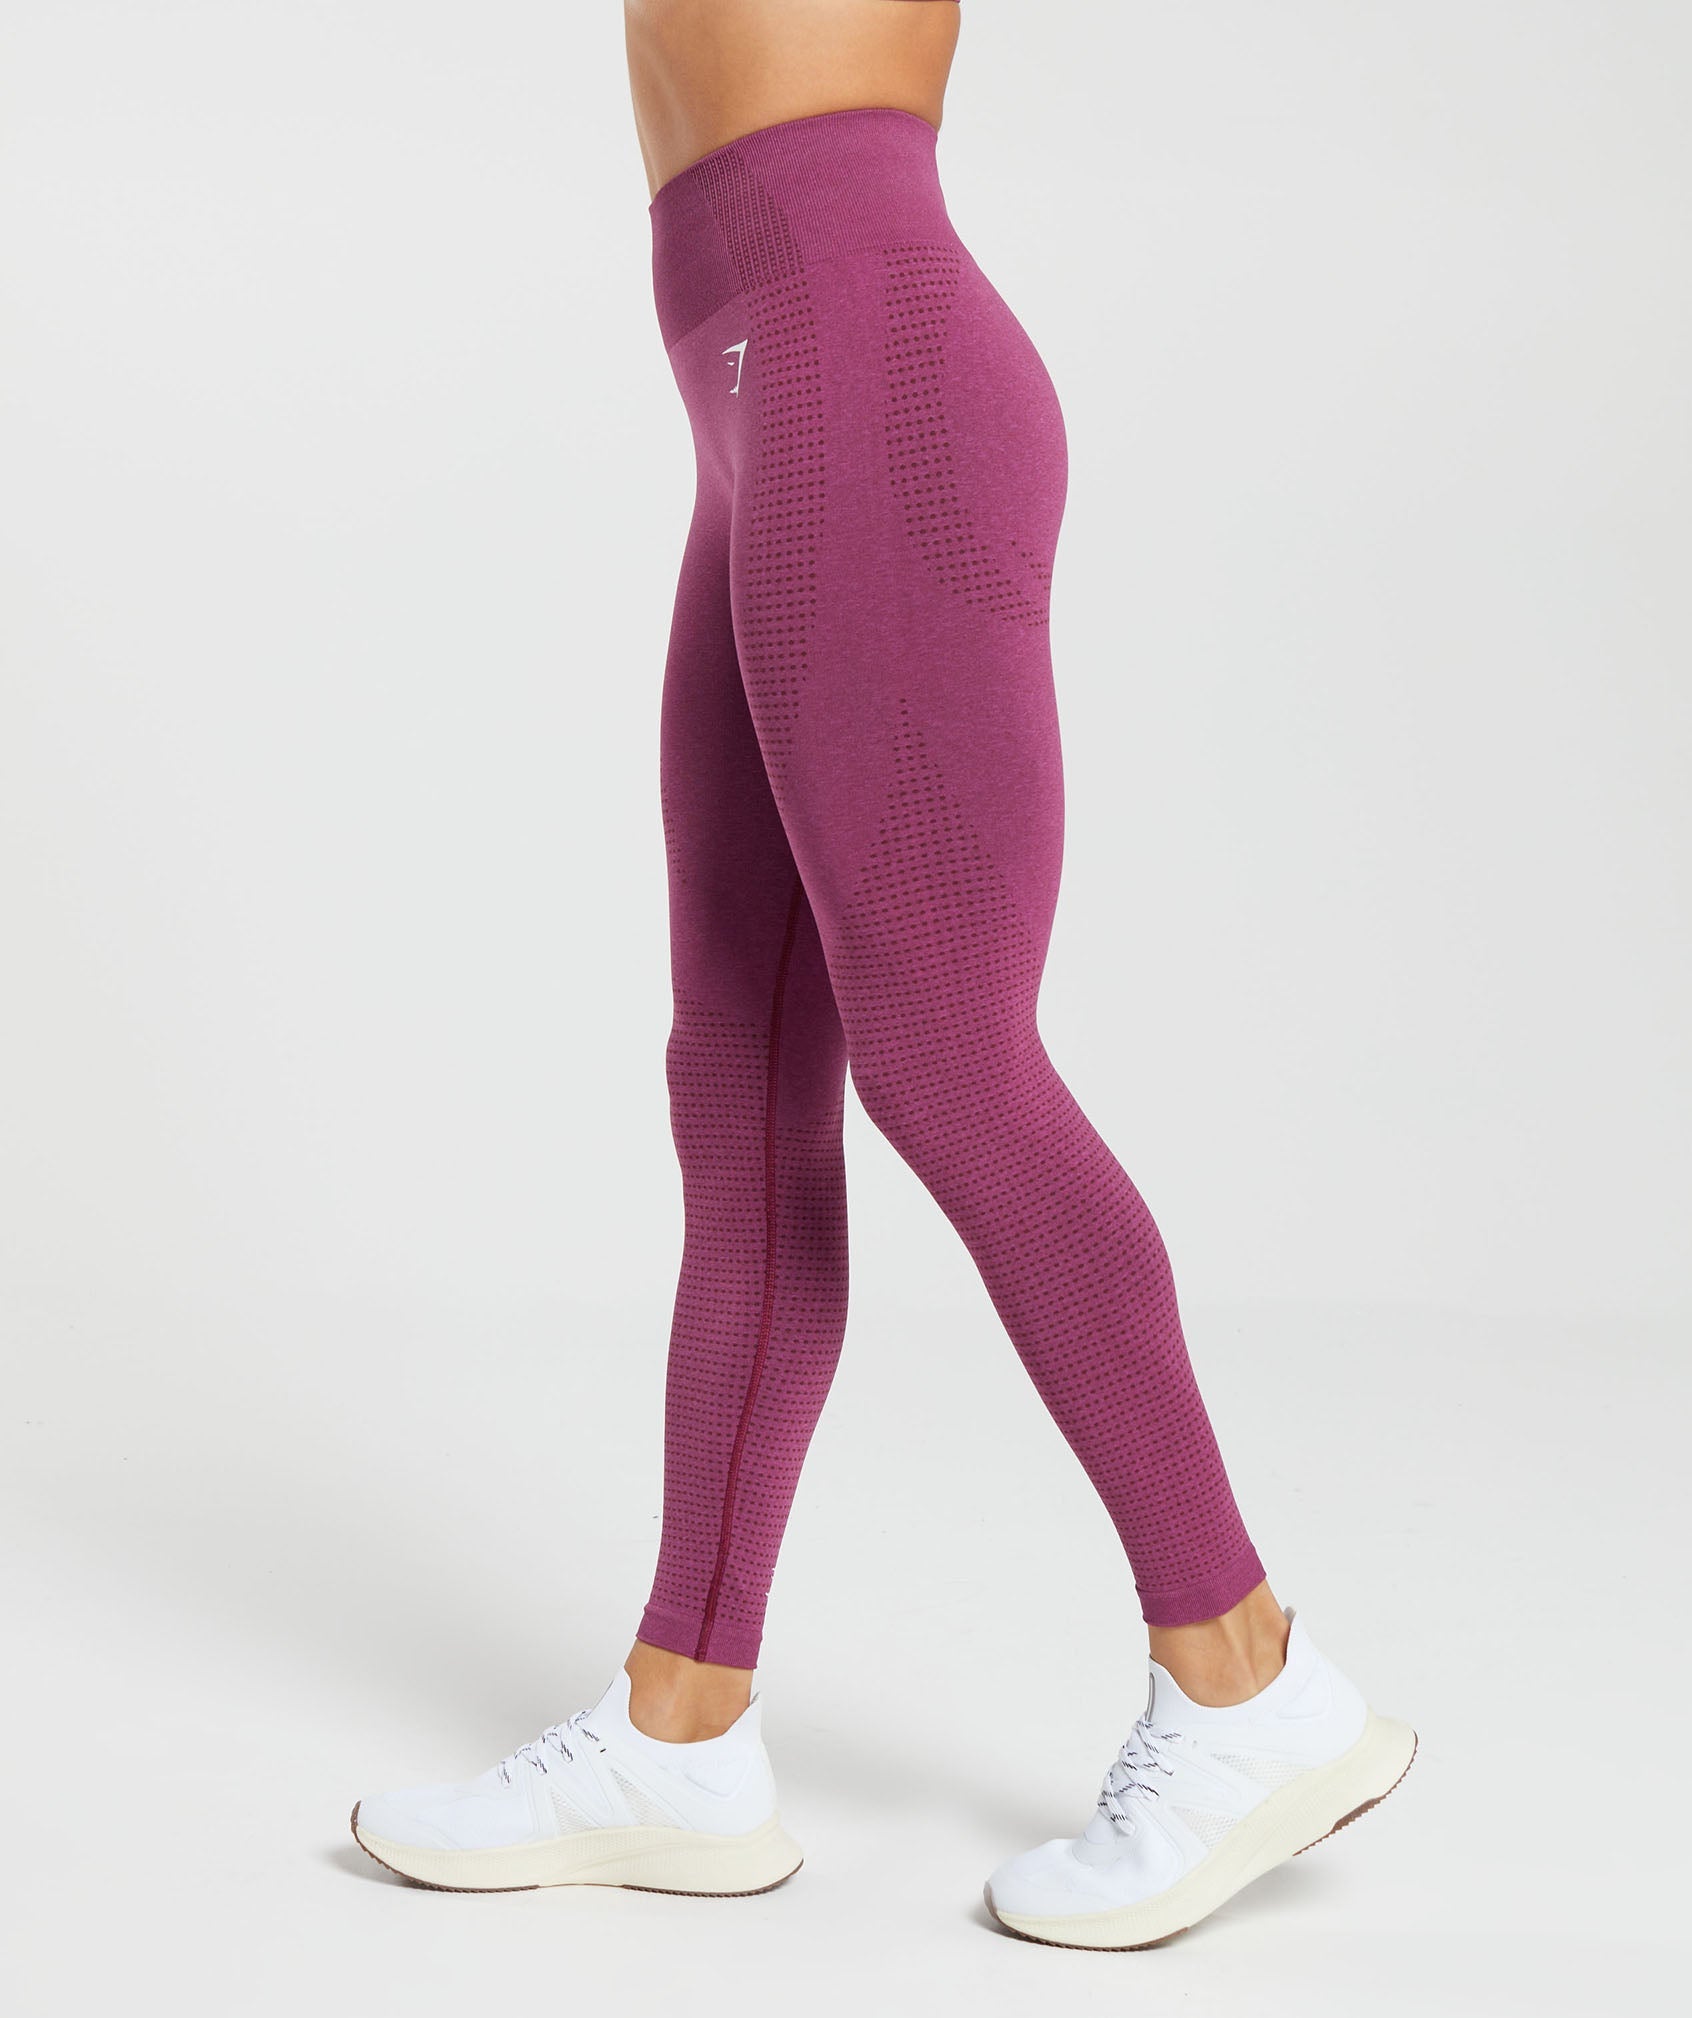 Gymshark Adapt Marl Seamless Leggings Pink Size M - $31 (43% Off